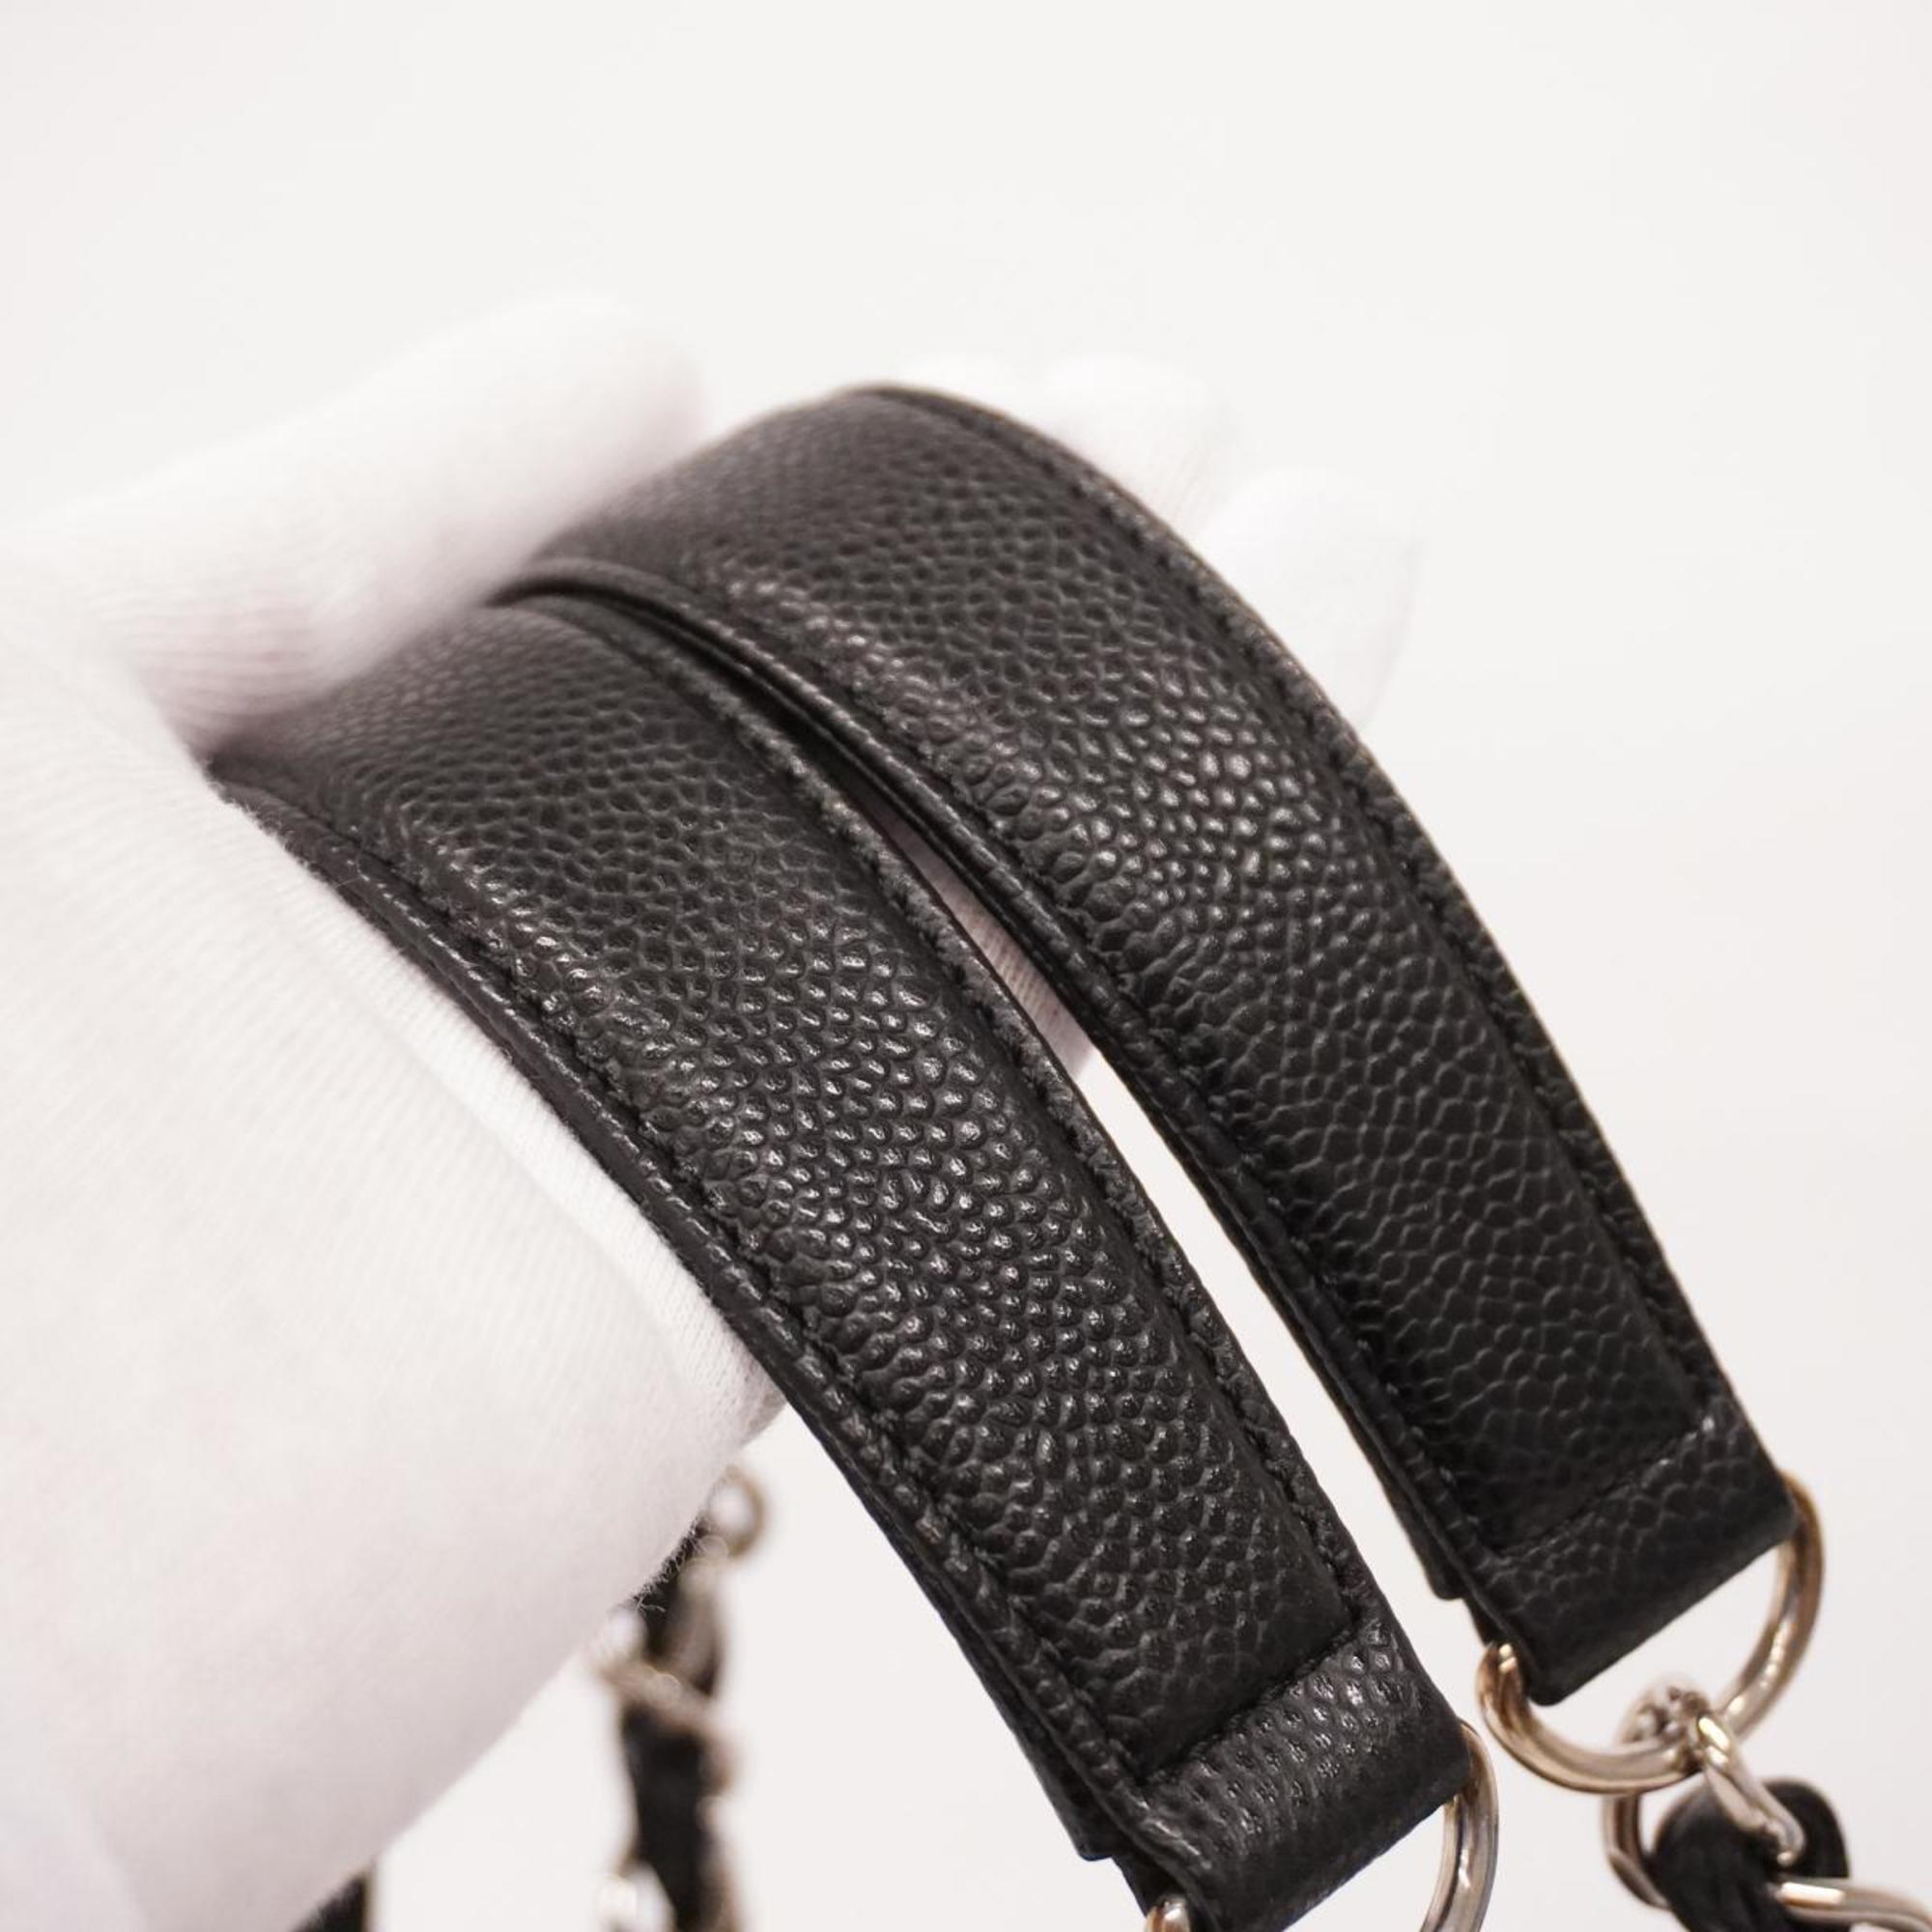 Chanel Tote Bag Matelasse Chain Shoulder Caviar Skin Black Women's